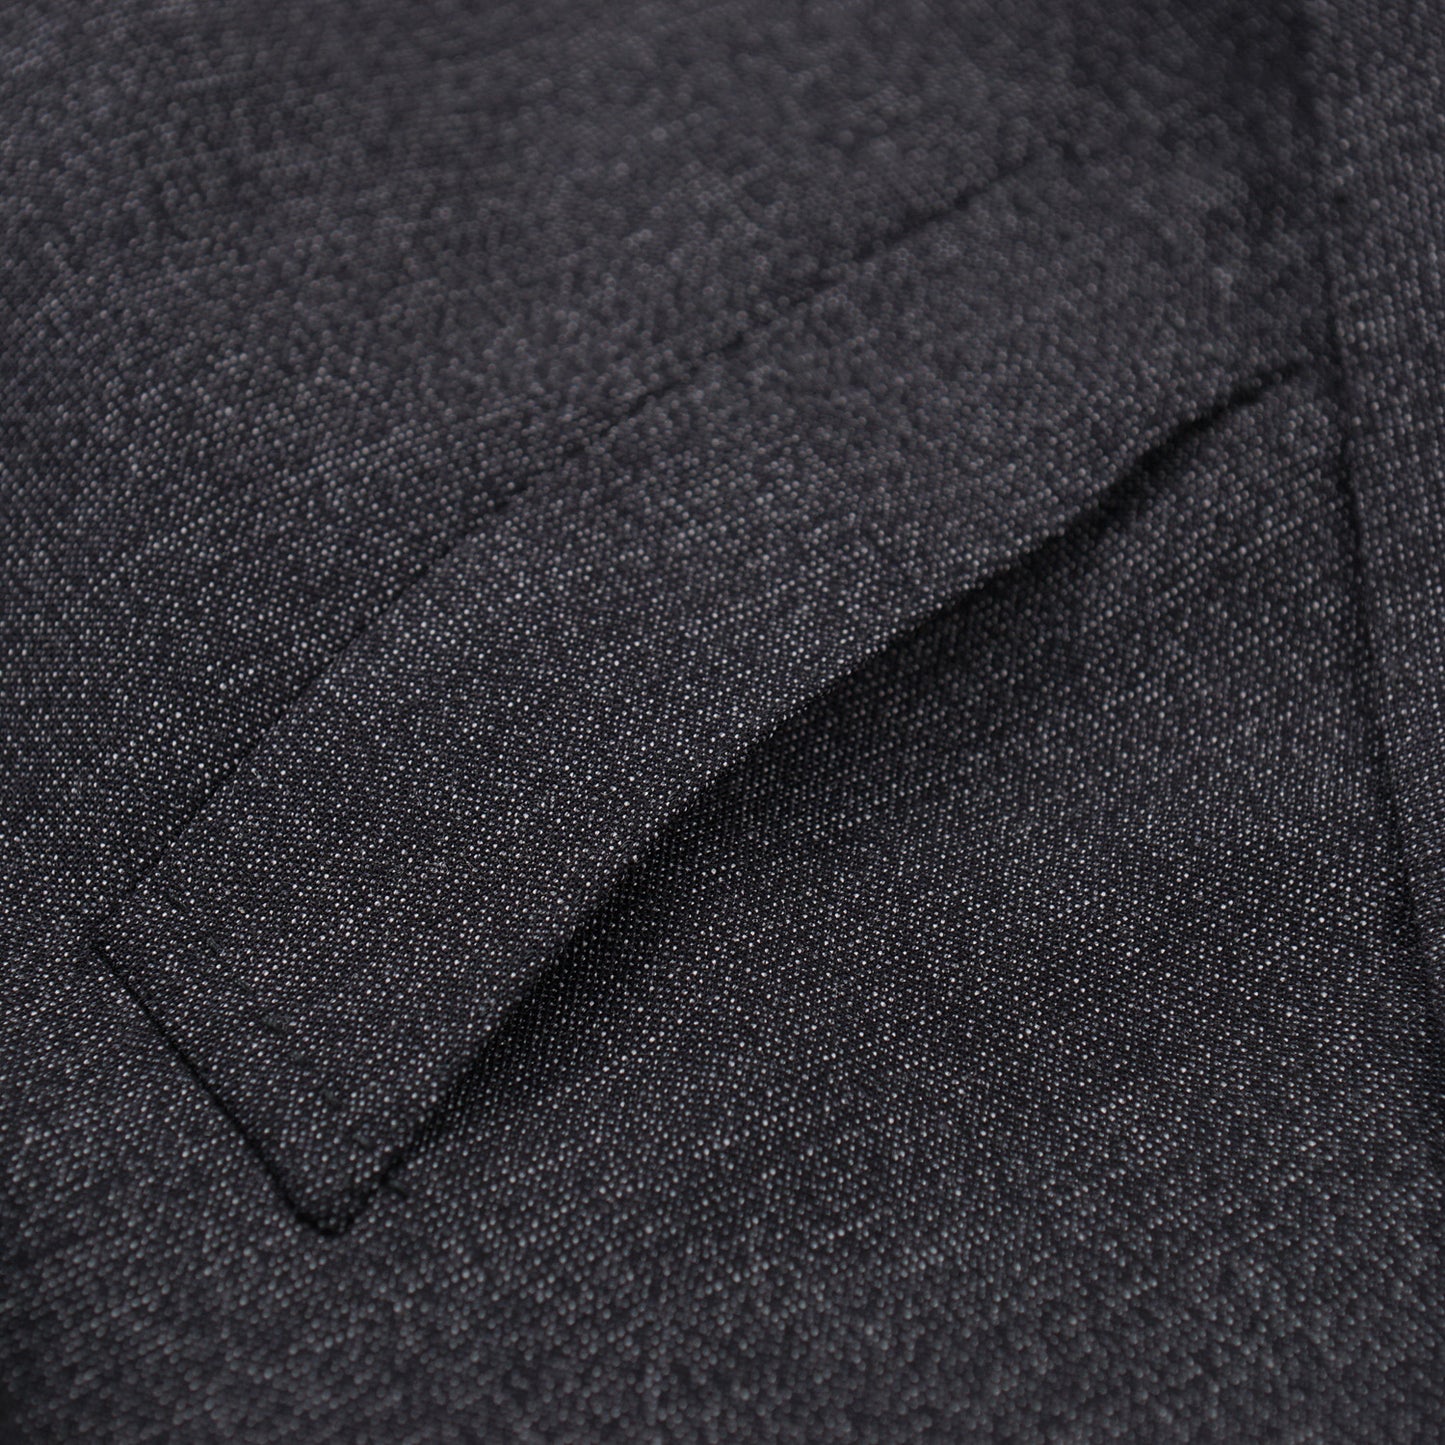 Ermenegildo Zegna 'Trecapi' Wool Suit - Top Shelf Apparel